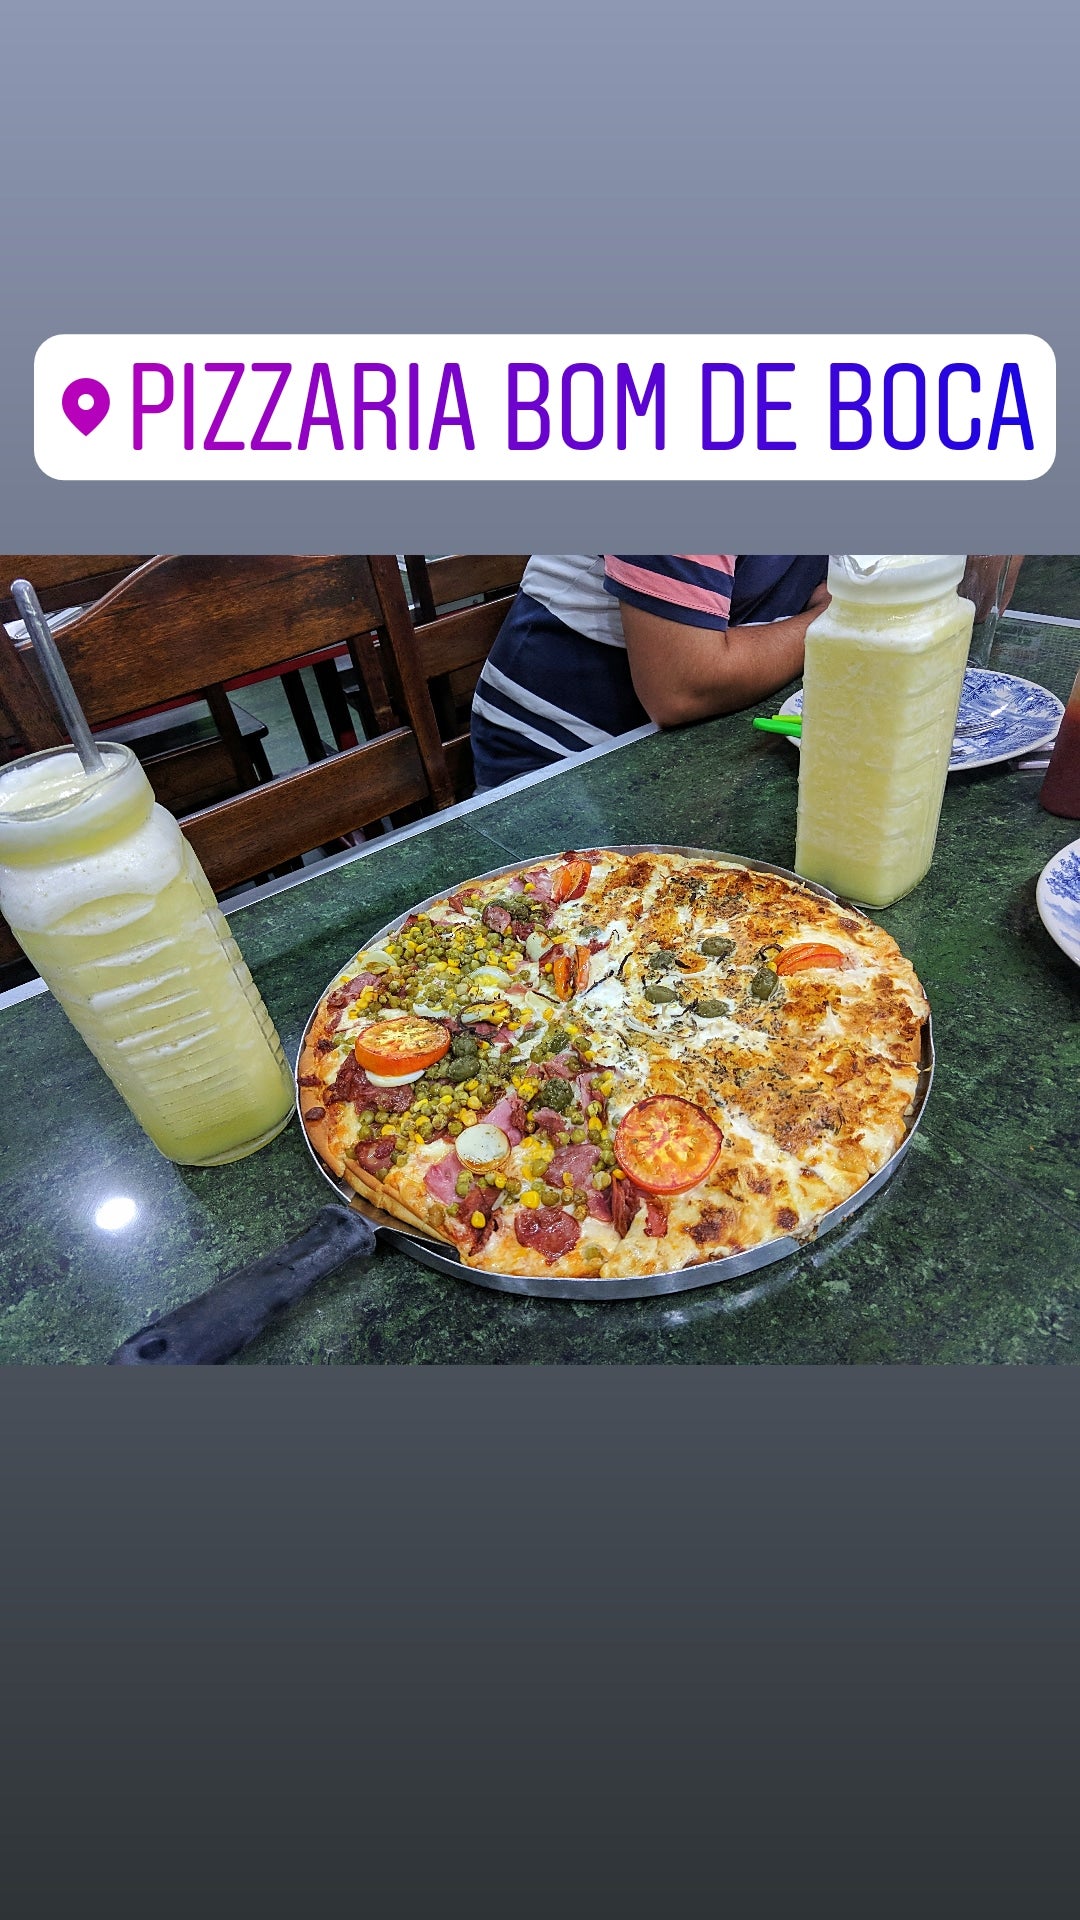 Pizzaria Bom de Boca